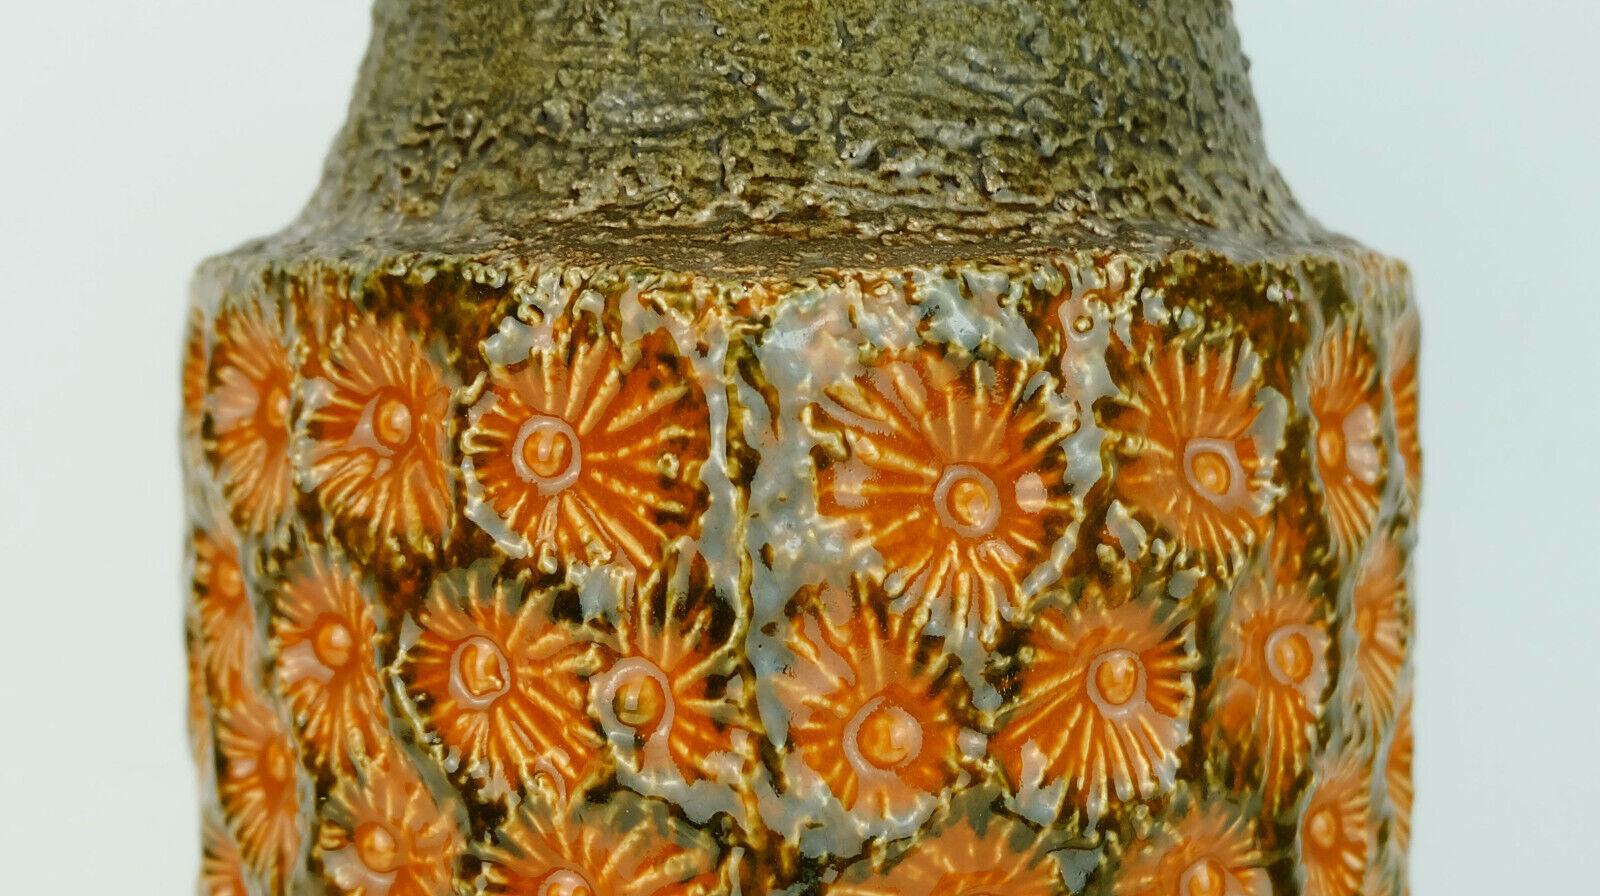 Mid-20th Century large jasba mid century VASE floor vase flower relief decor in orange brown gree